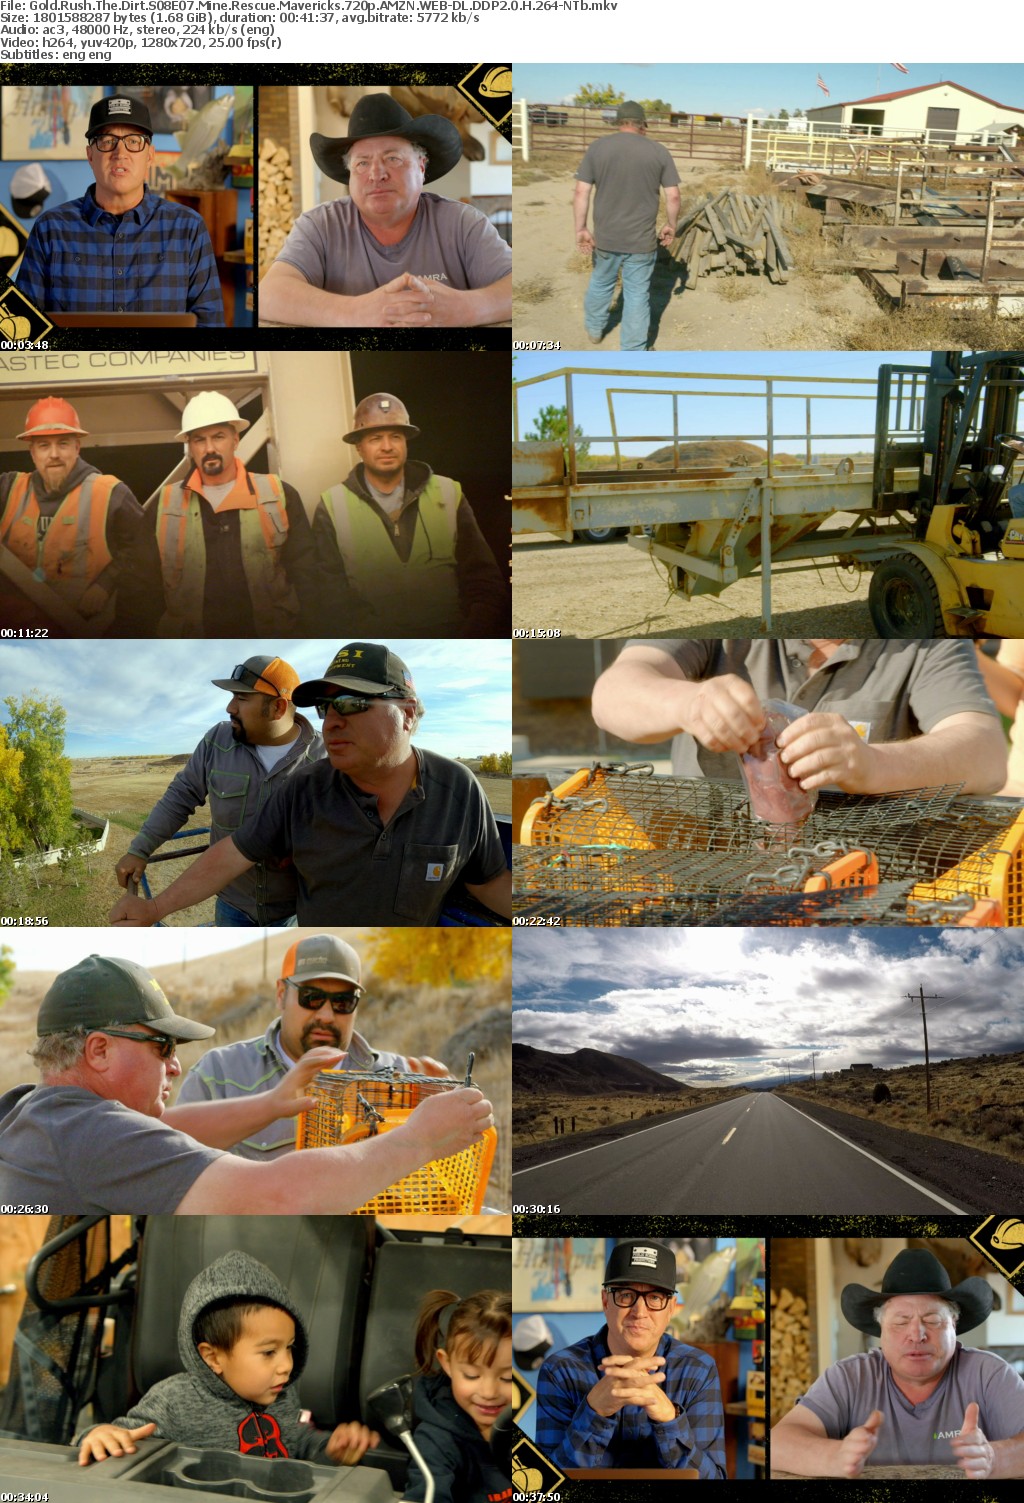 Gold Rush The Dirt S08E07 Mine Rescue Mavericks 720p AMZN WEBRip DDP2 0 x264-NTb